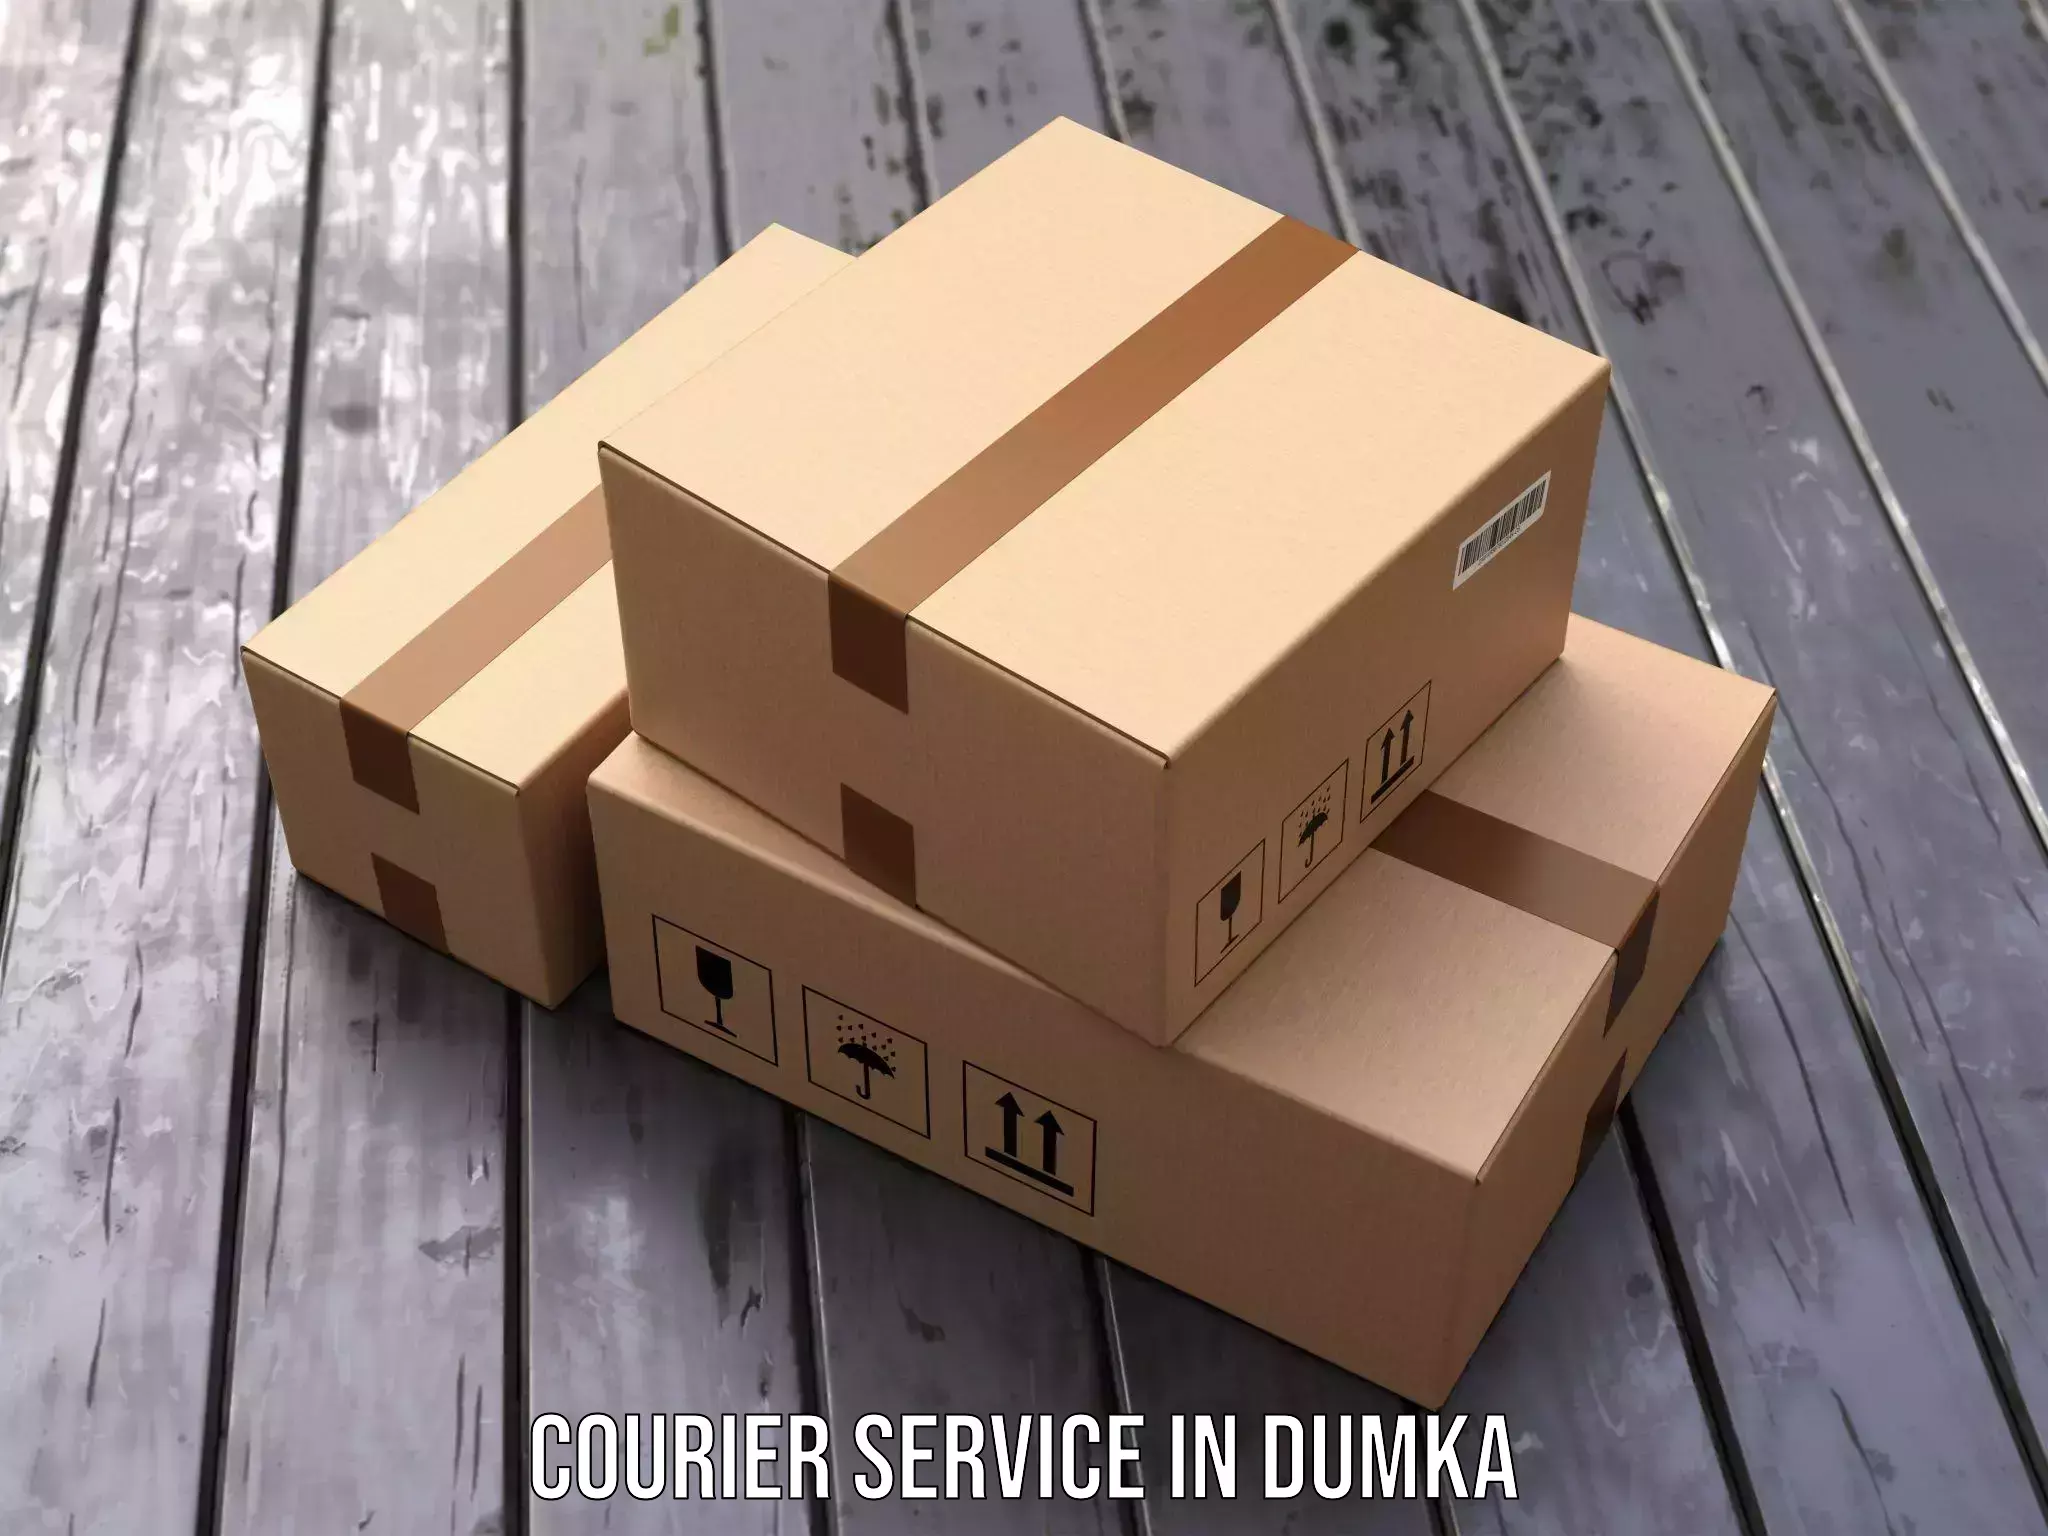 User-friendly delivery service in Dumka